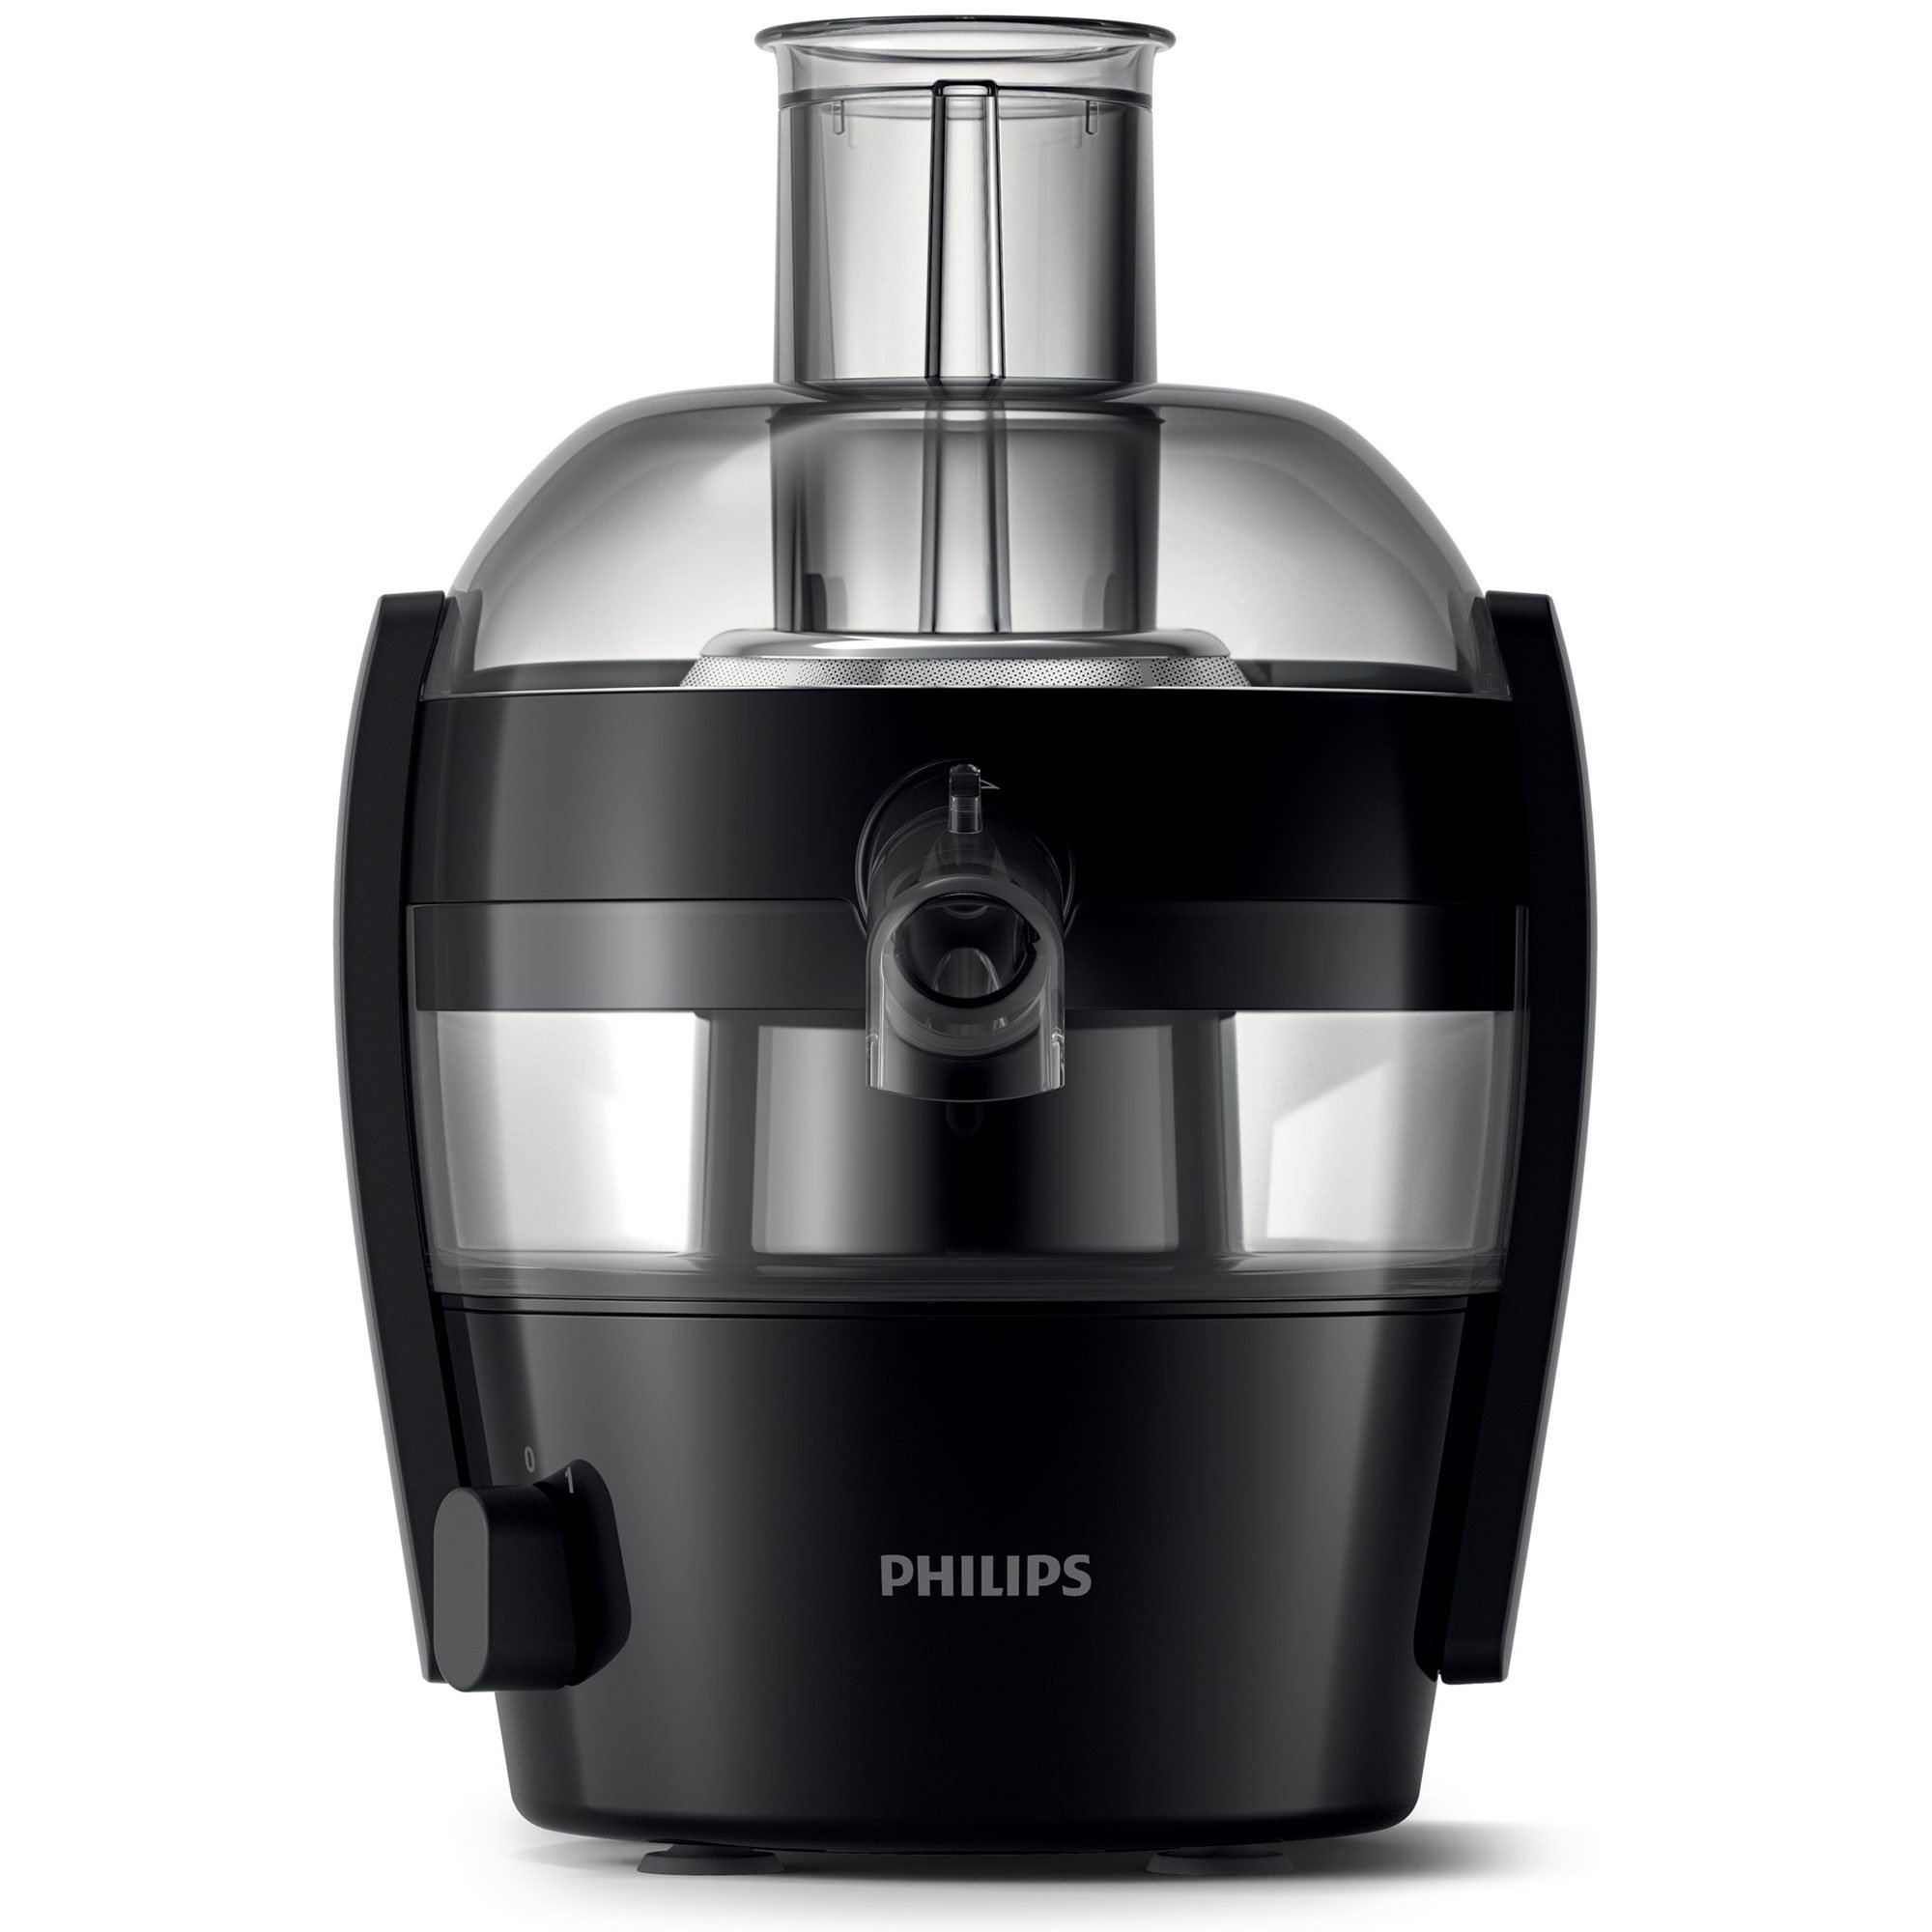 Philips HR1832/00 Viva Collection juicer, sort